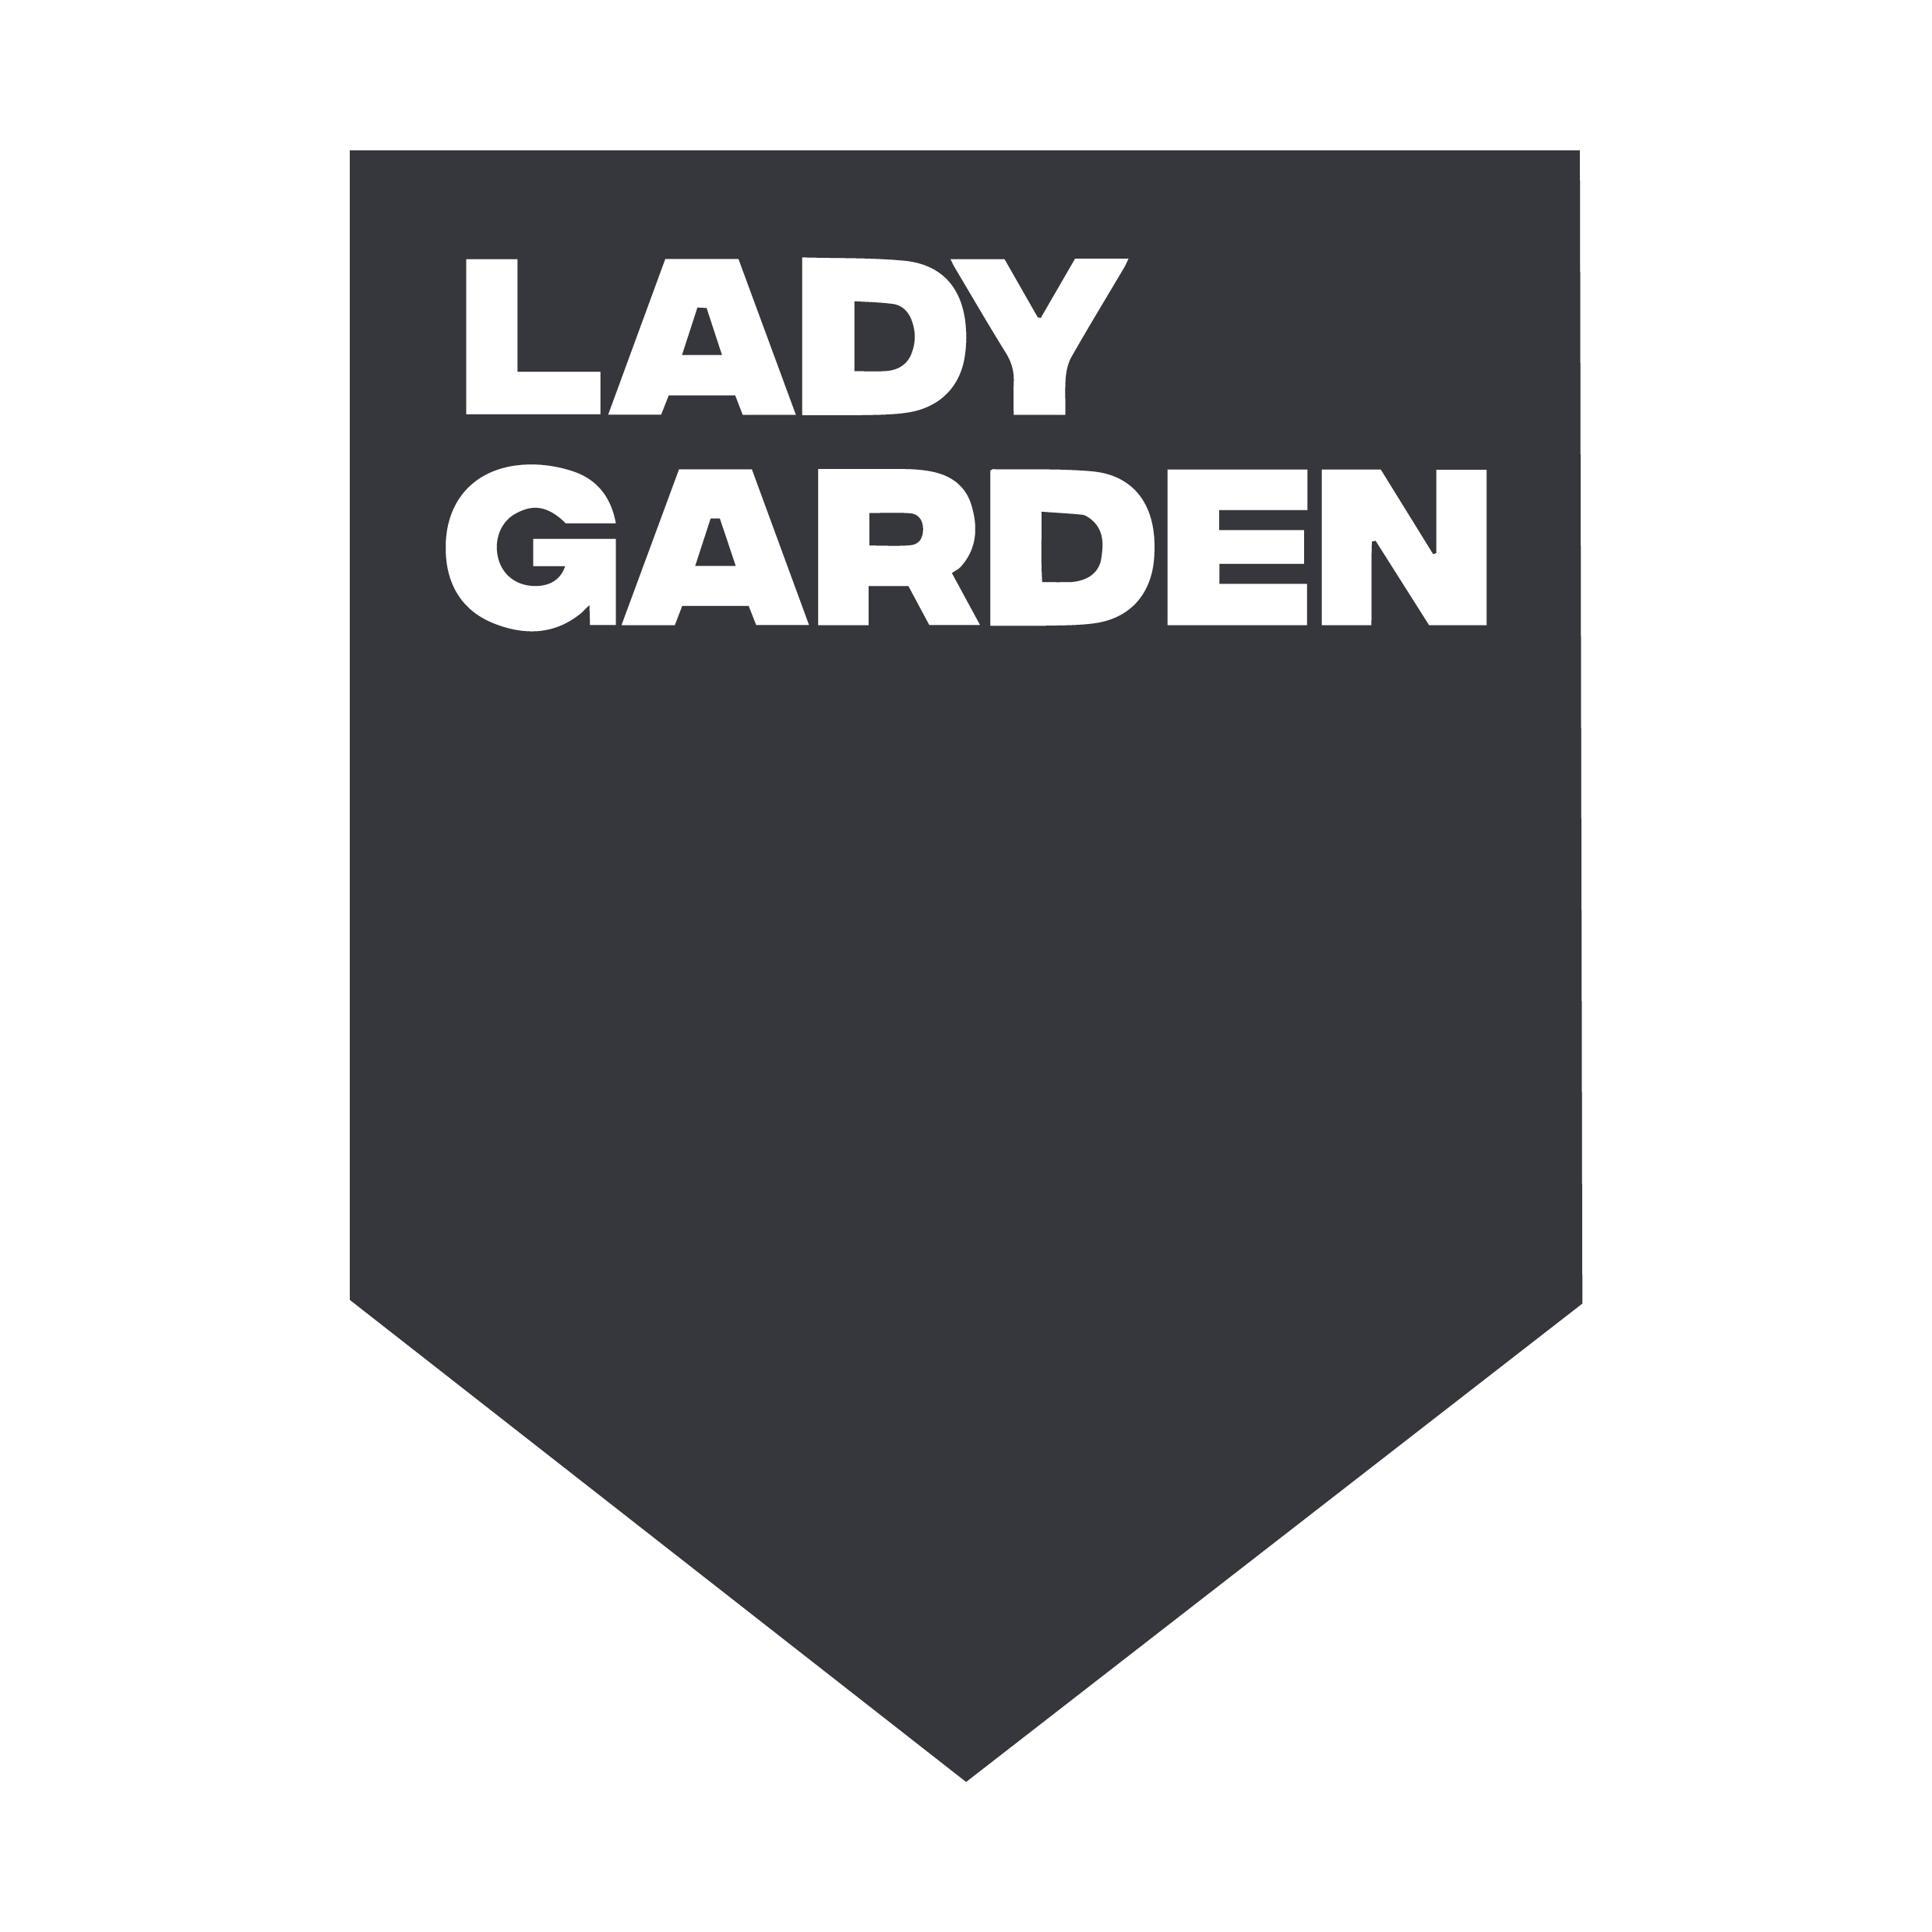 The Lady Garden Foundation